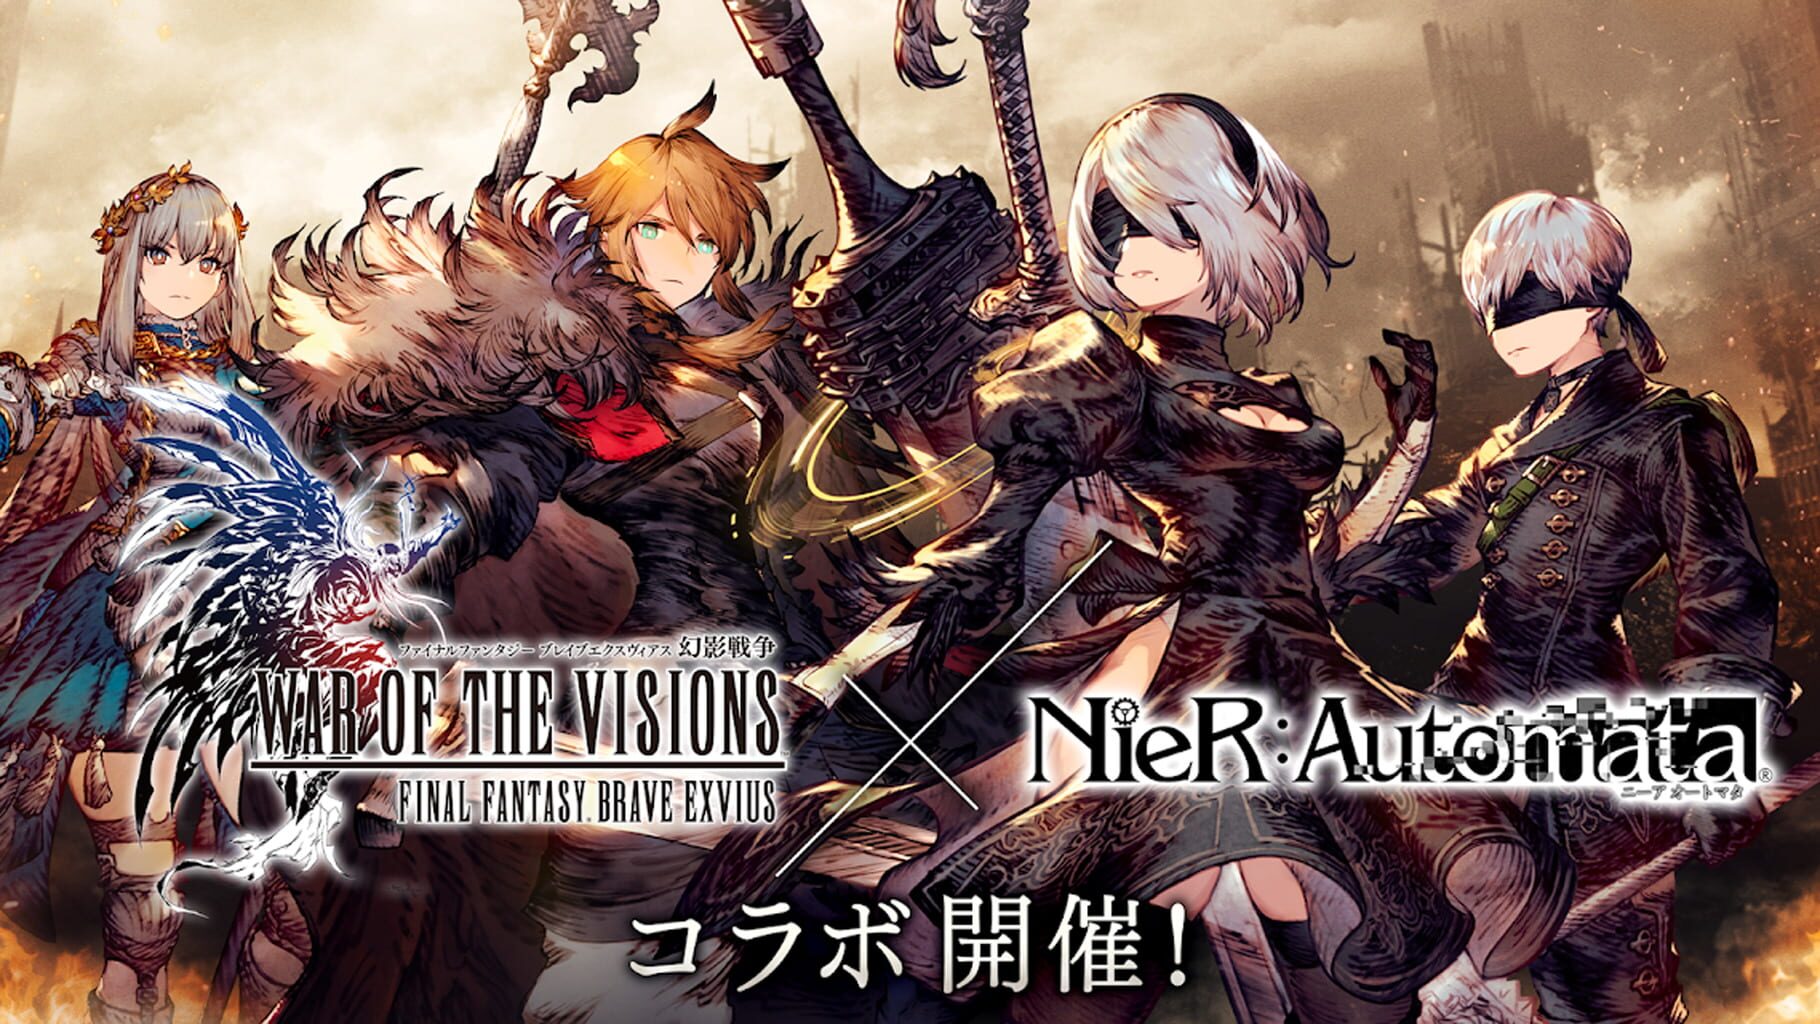 Arte - War of the Visions: Final Fantasy Brave Exvius